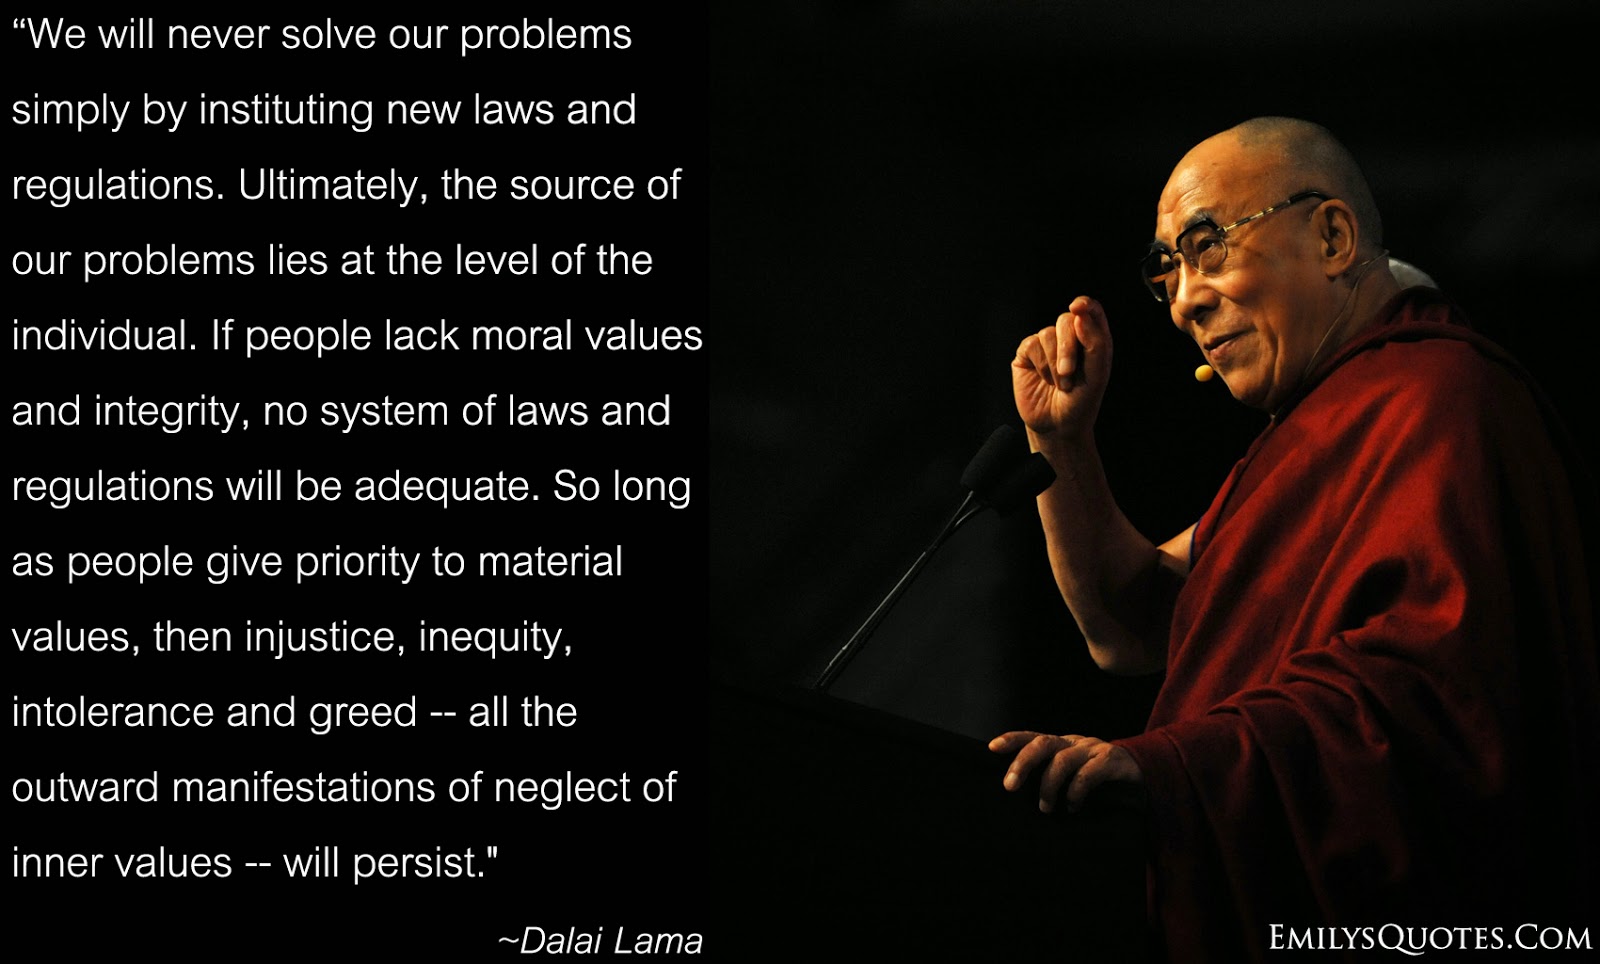 dalai lama quotes on leadership